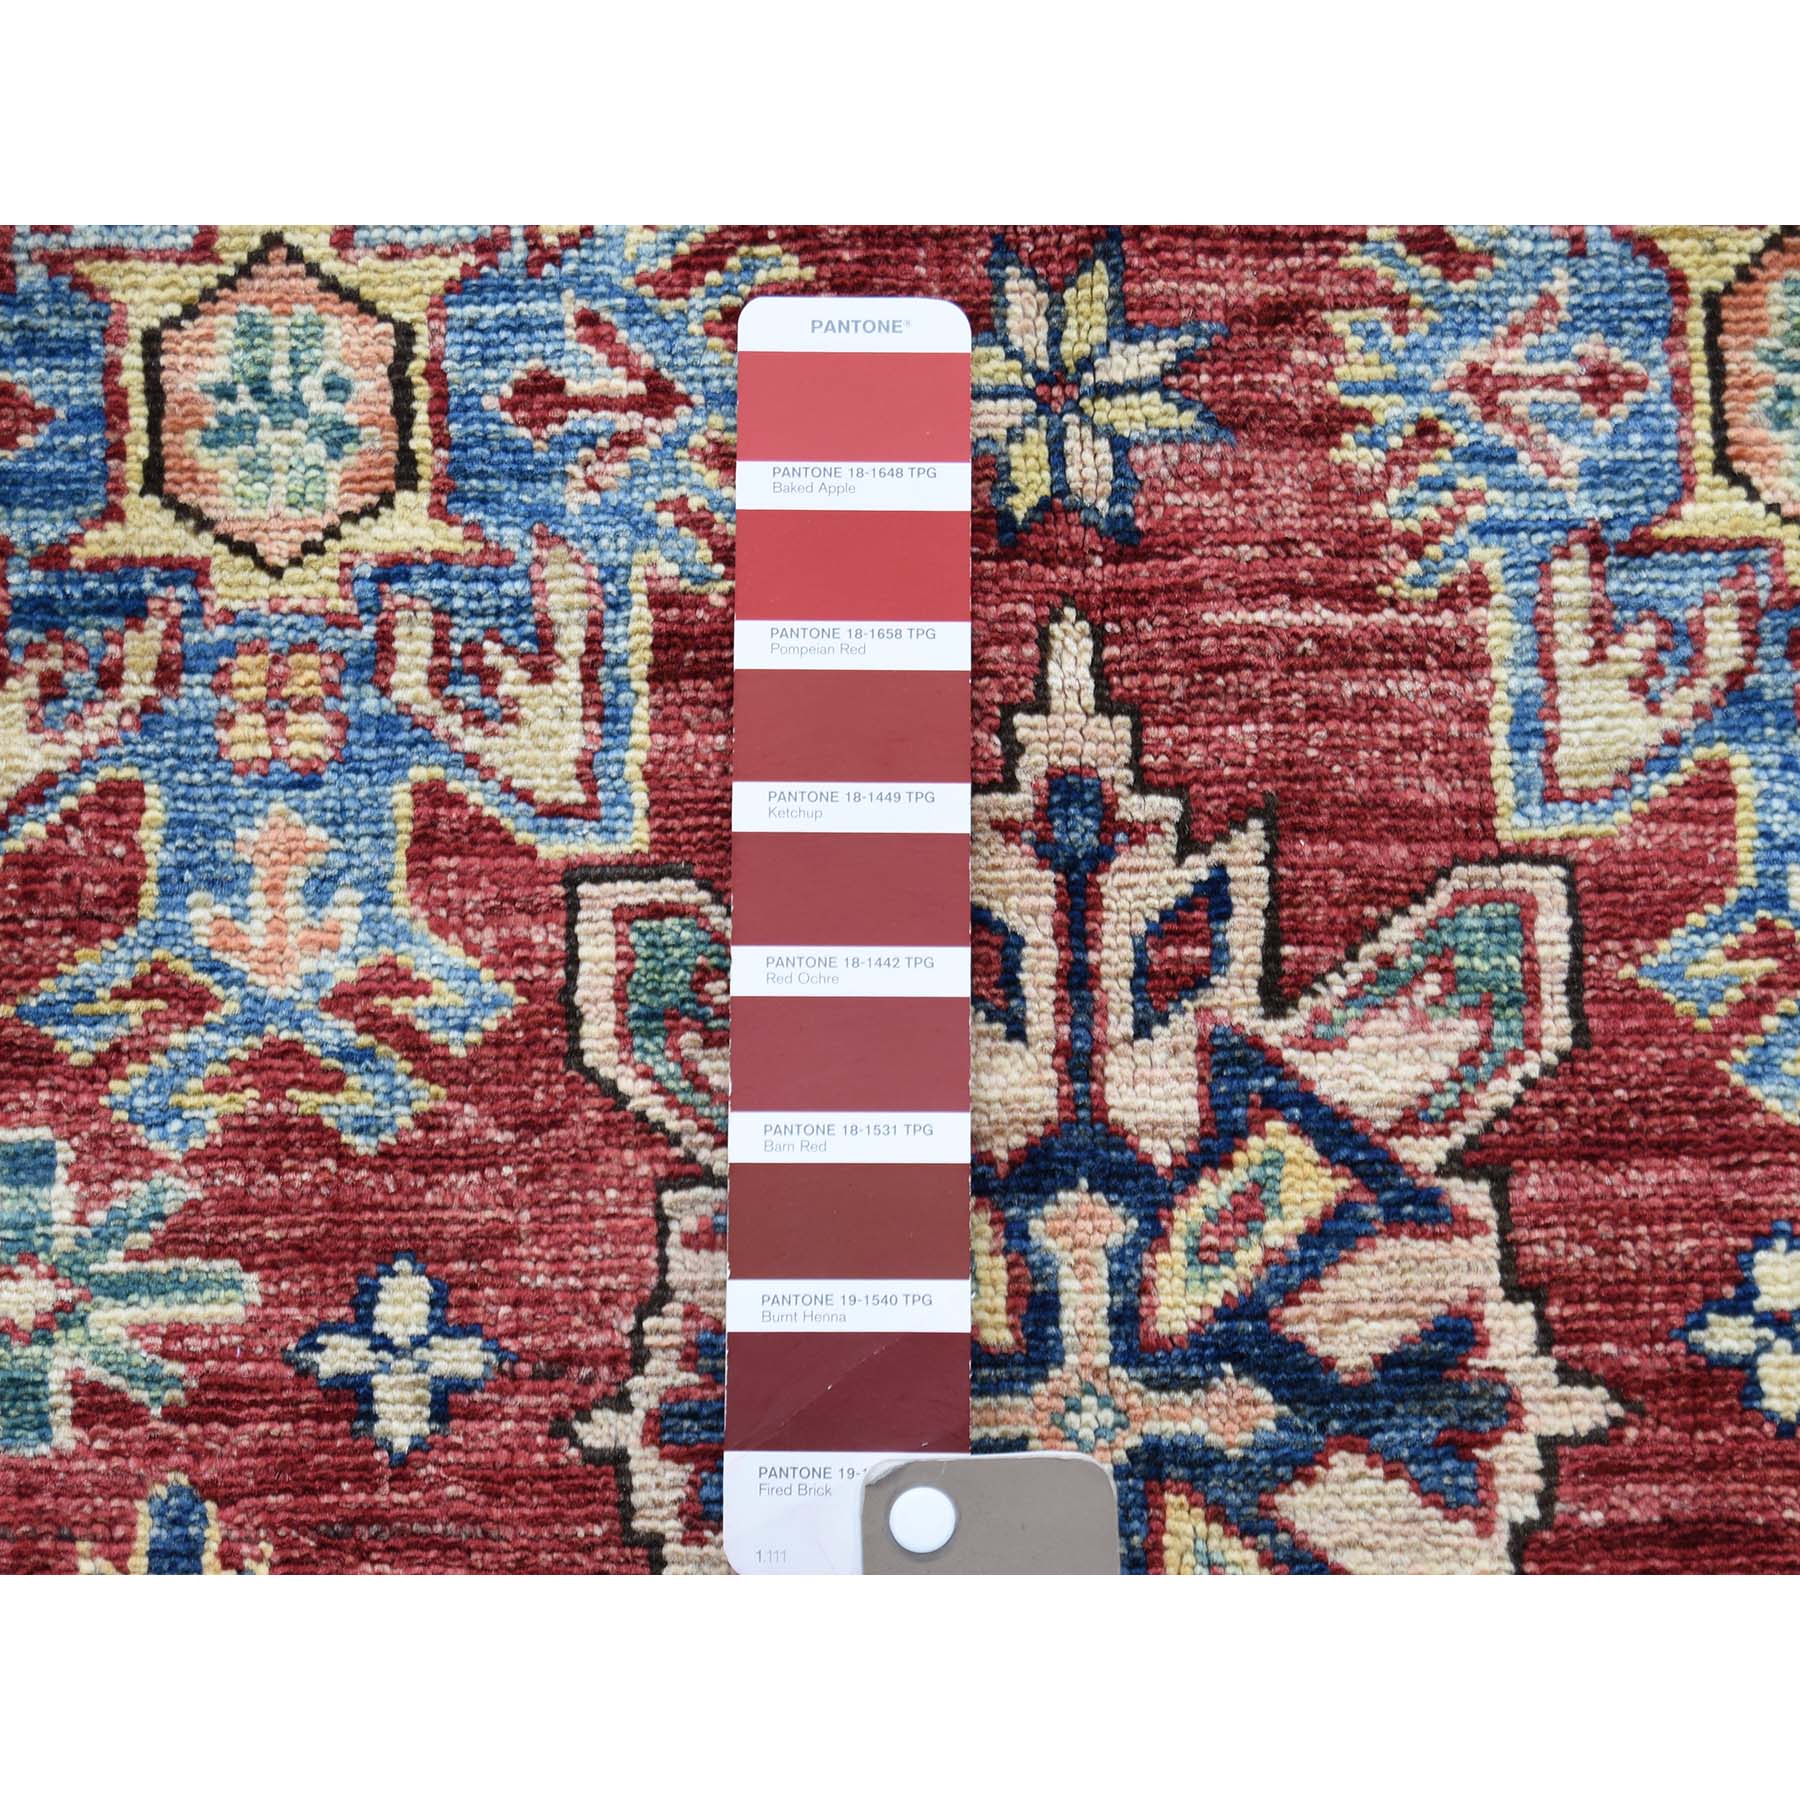 3-3 x4-10  Super Kazak Pure Wool Geometric Design Hand-Knotted Oriental Rug 